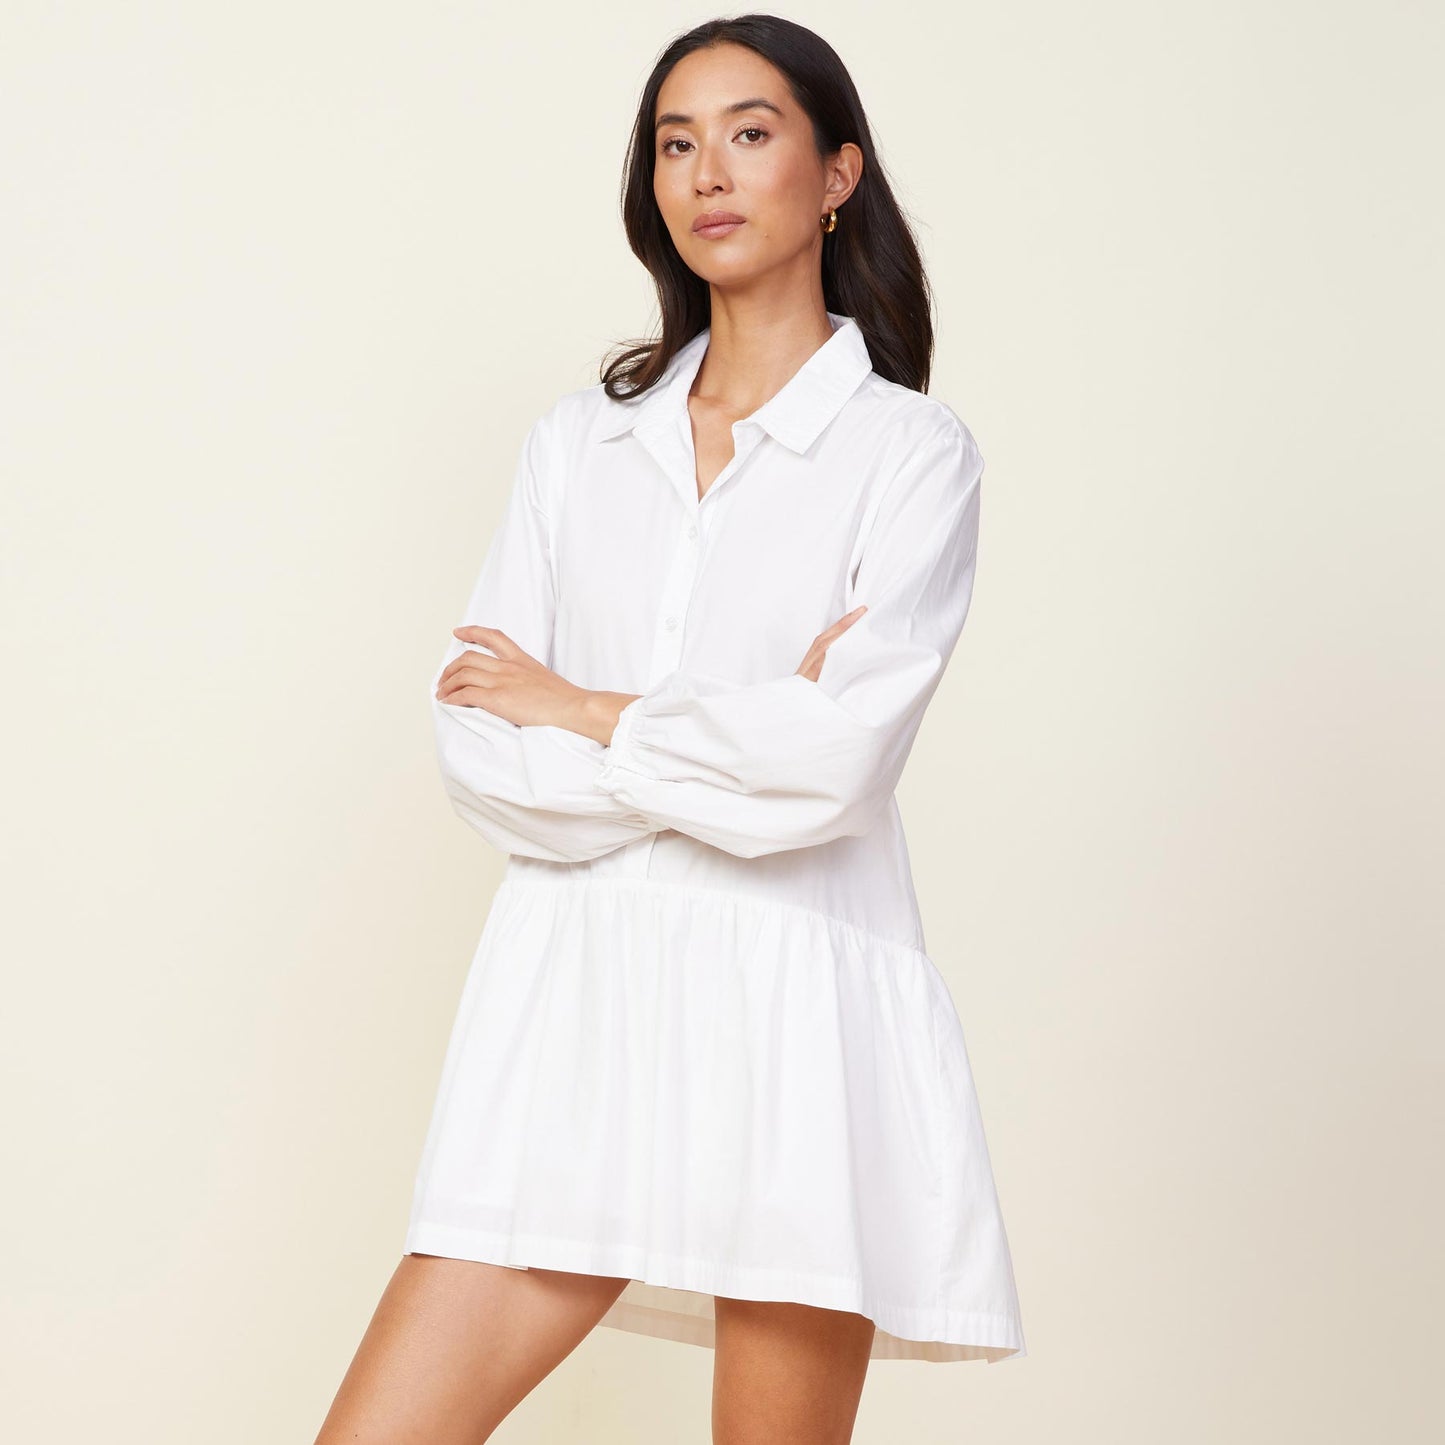 Side view of model wearing the poplin easy shirt dress in white.